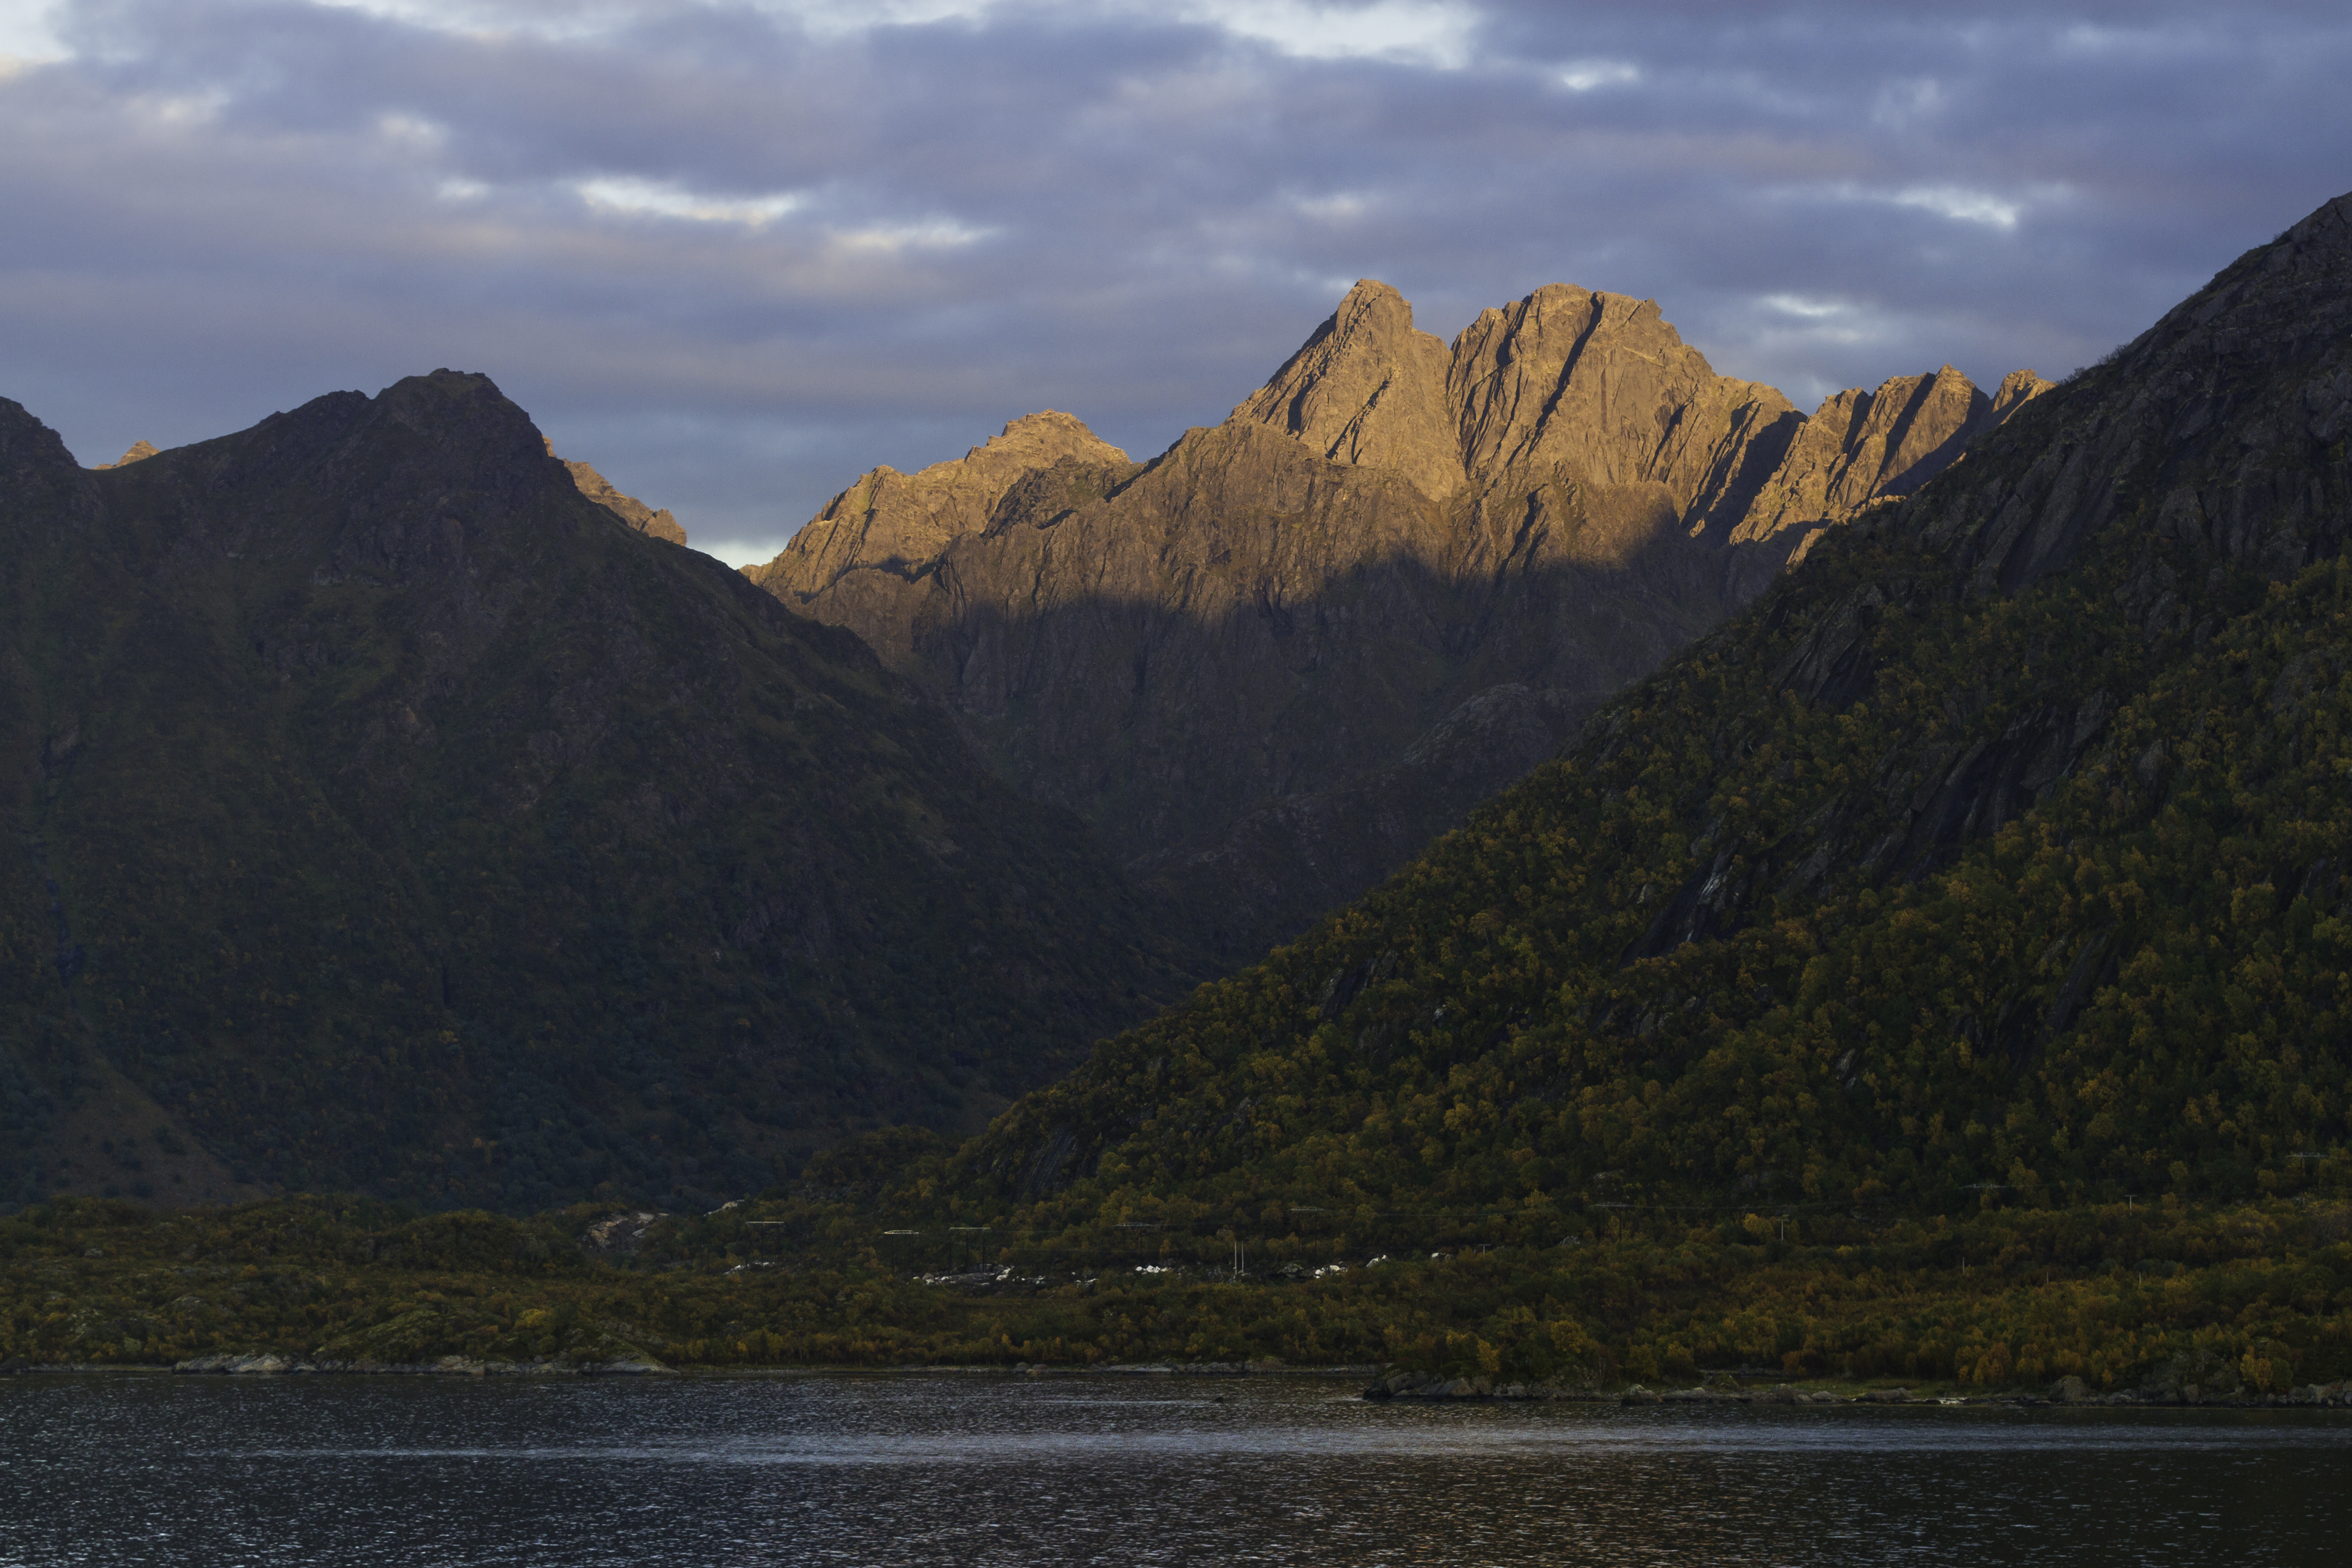 Olsanestinden and Vassdalstindan in evening light from Holdøya, Nordland, Norway, 2015 September